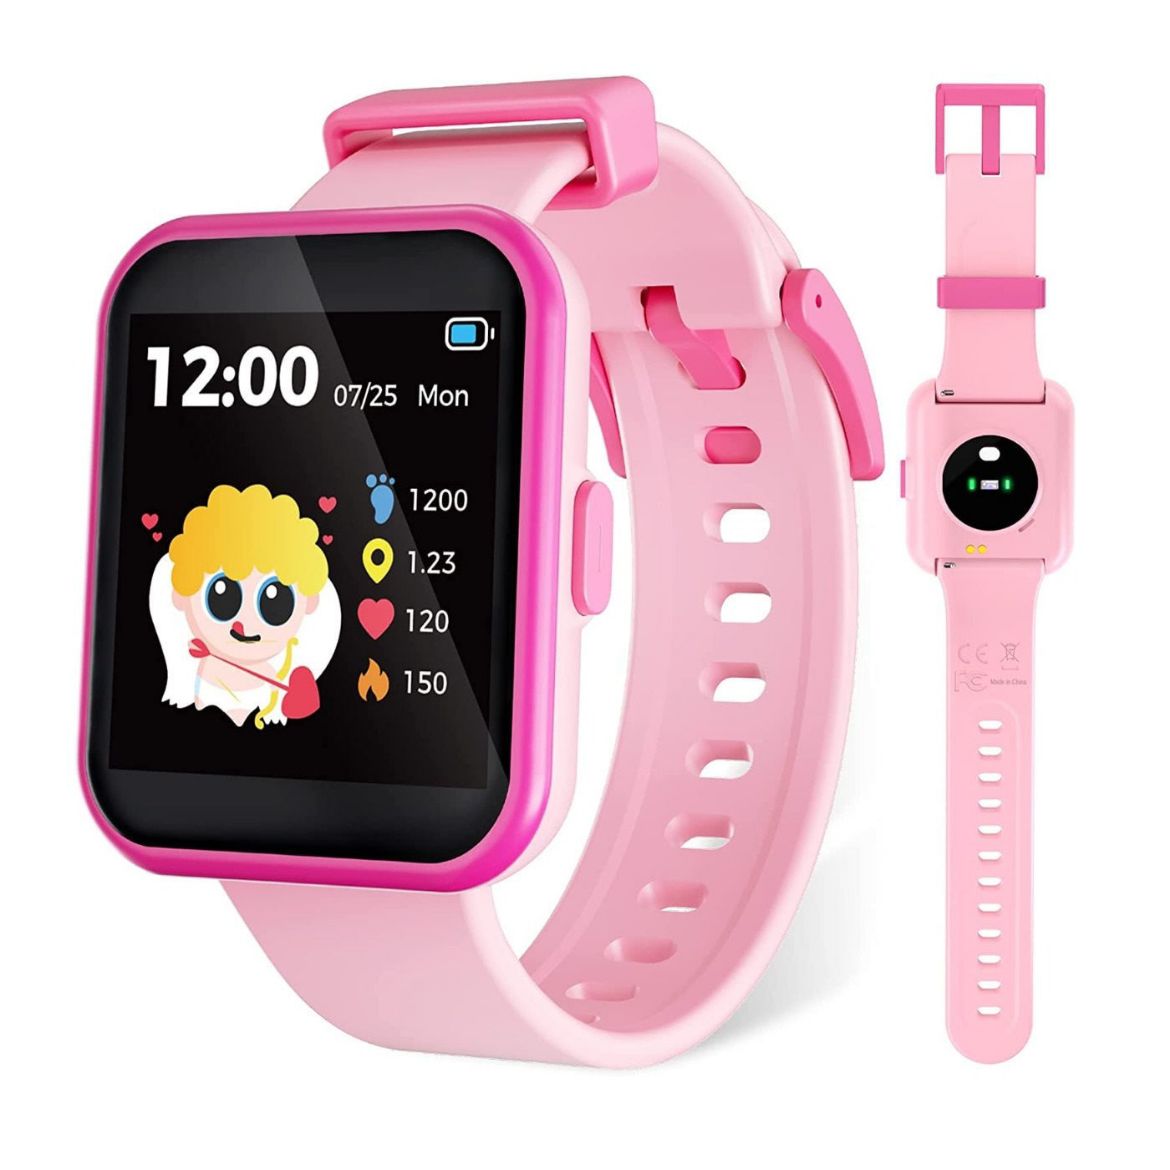 Picture of Kicoo Gobi Kids Smart Watch - Pink